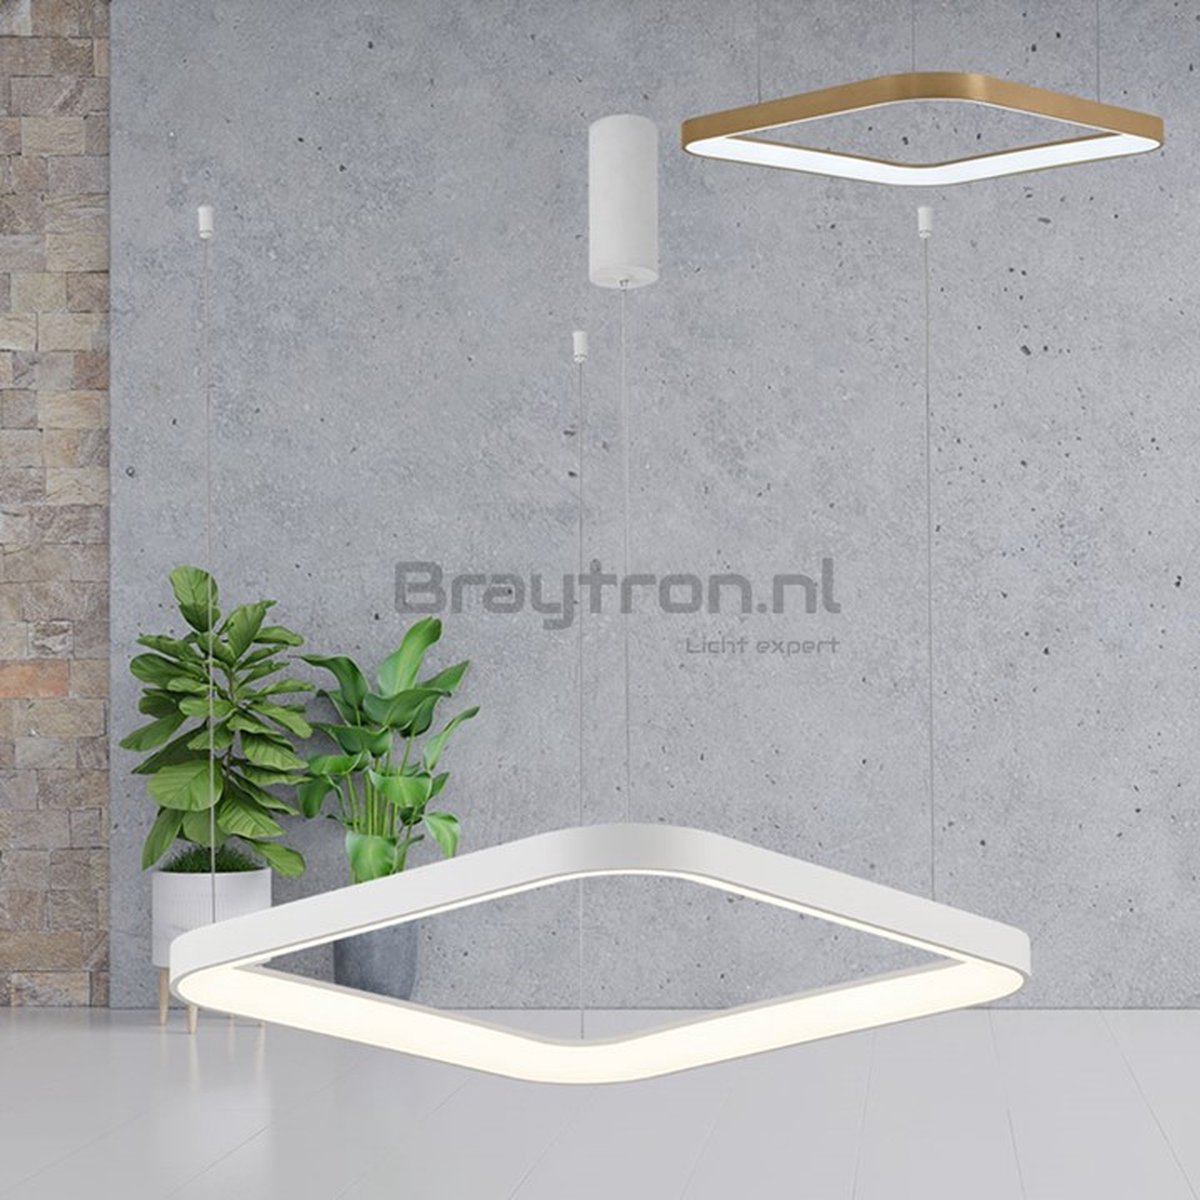 Braytron.nl | Decoratieve LED lamp BELLA | 48X48cm. | Witte vierkante led hanglamp | 36W | 3in1 wit kleuren licht | 3 jaar garantie.